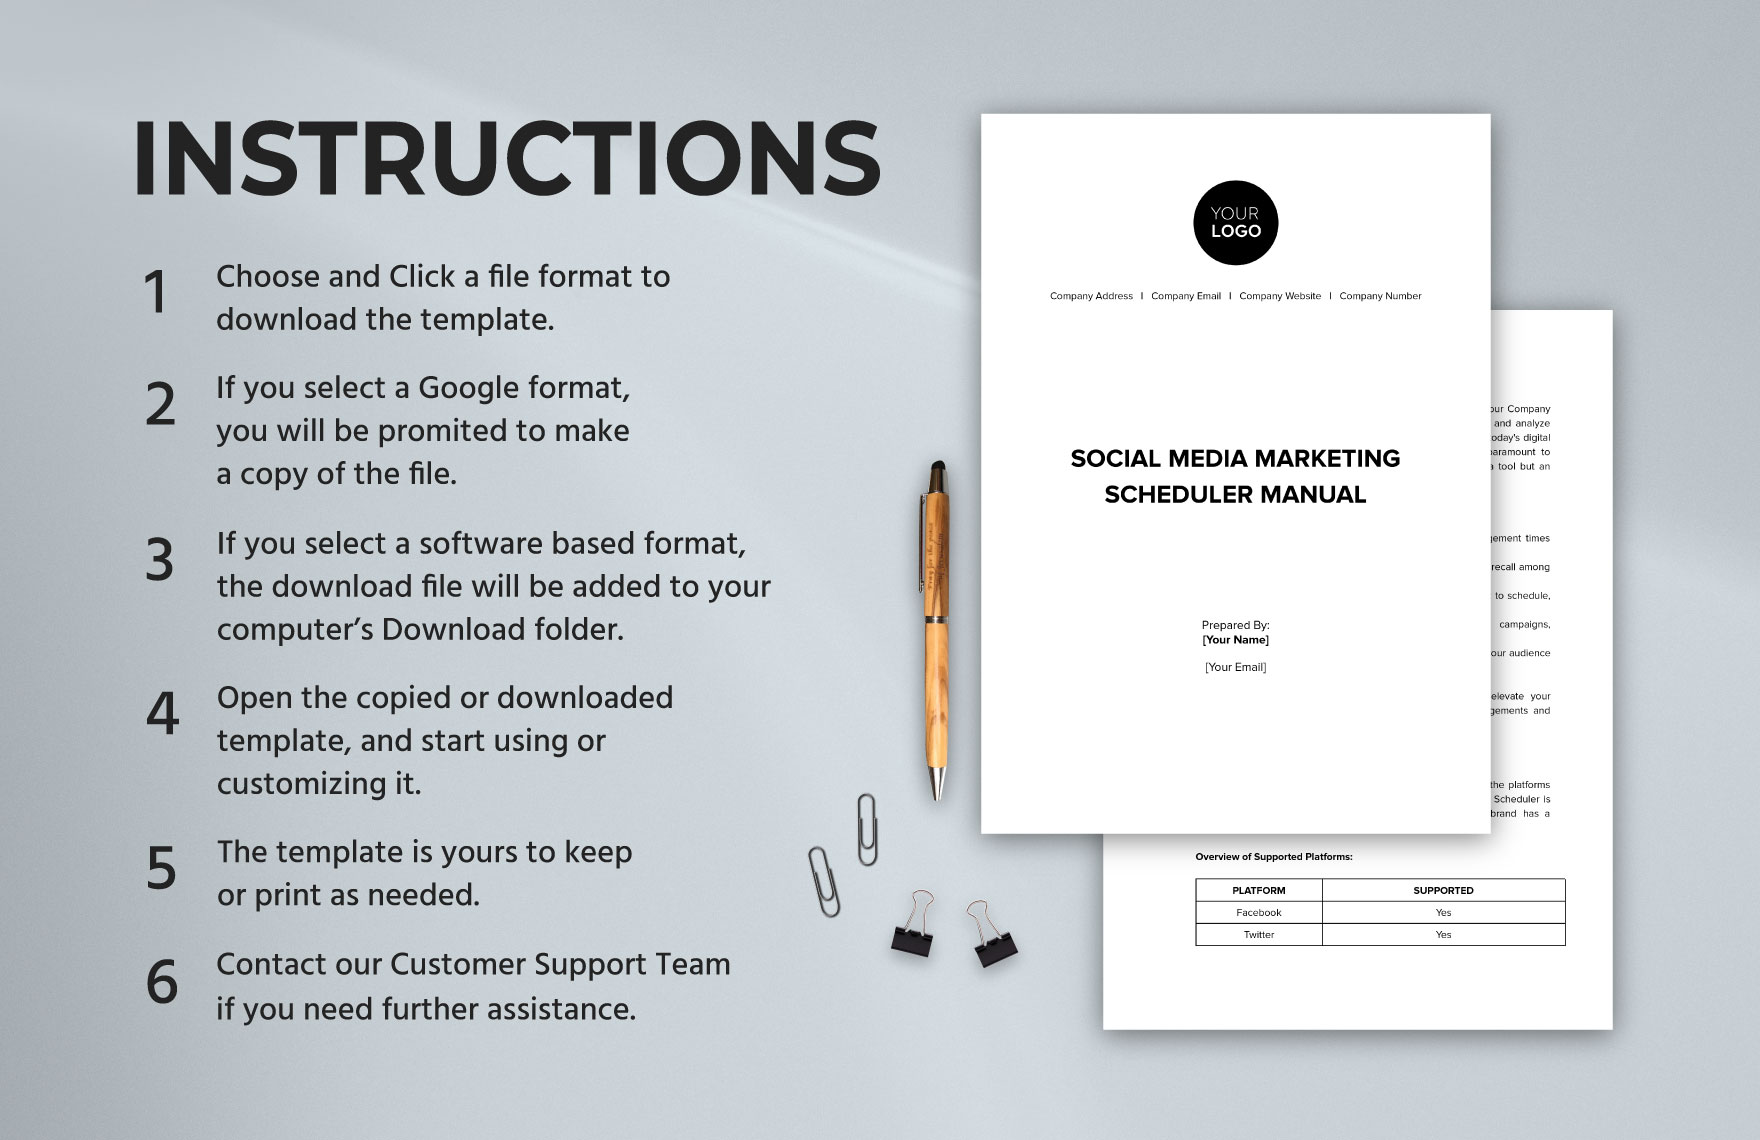 Social Media Marketing Scheduler Manual Template